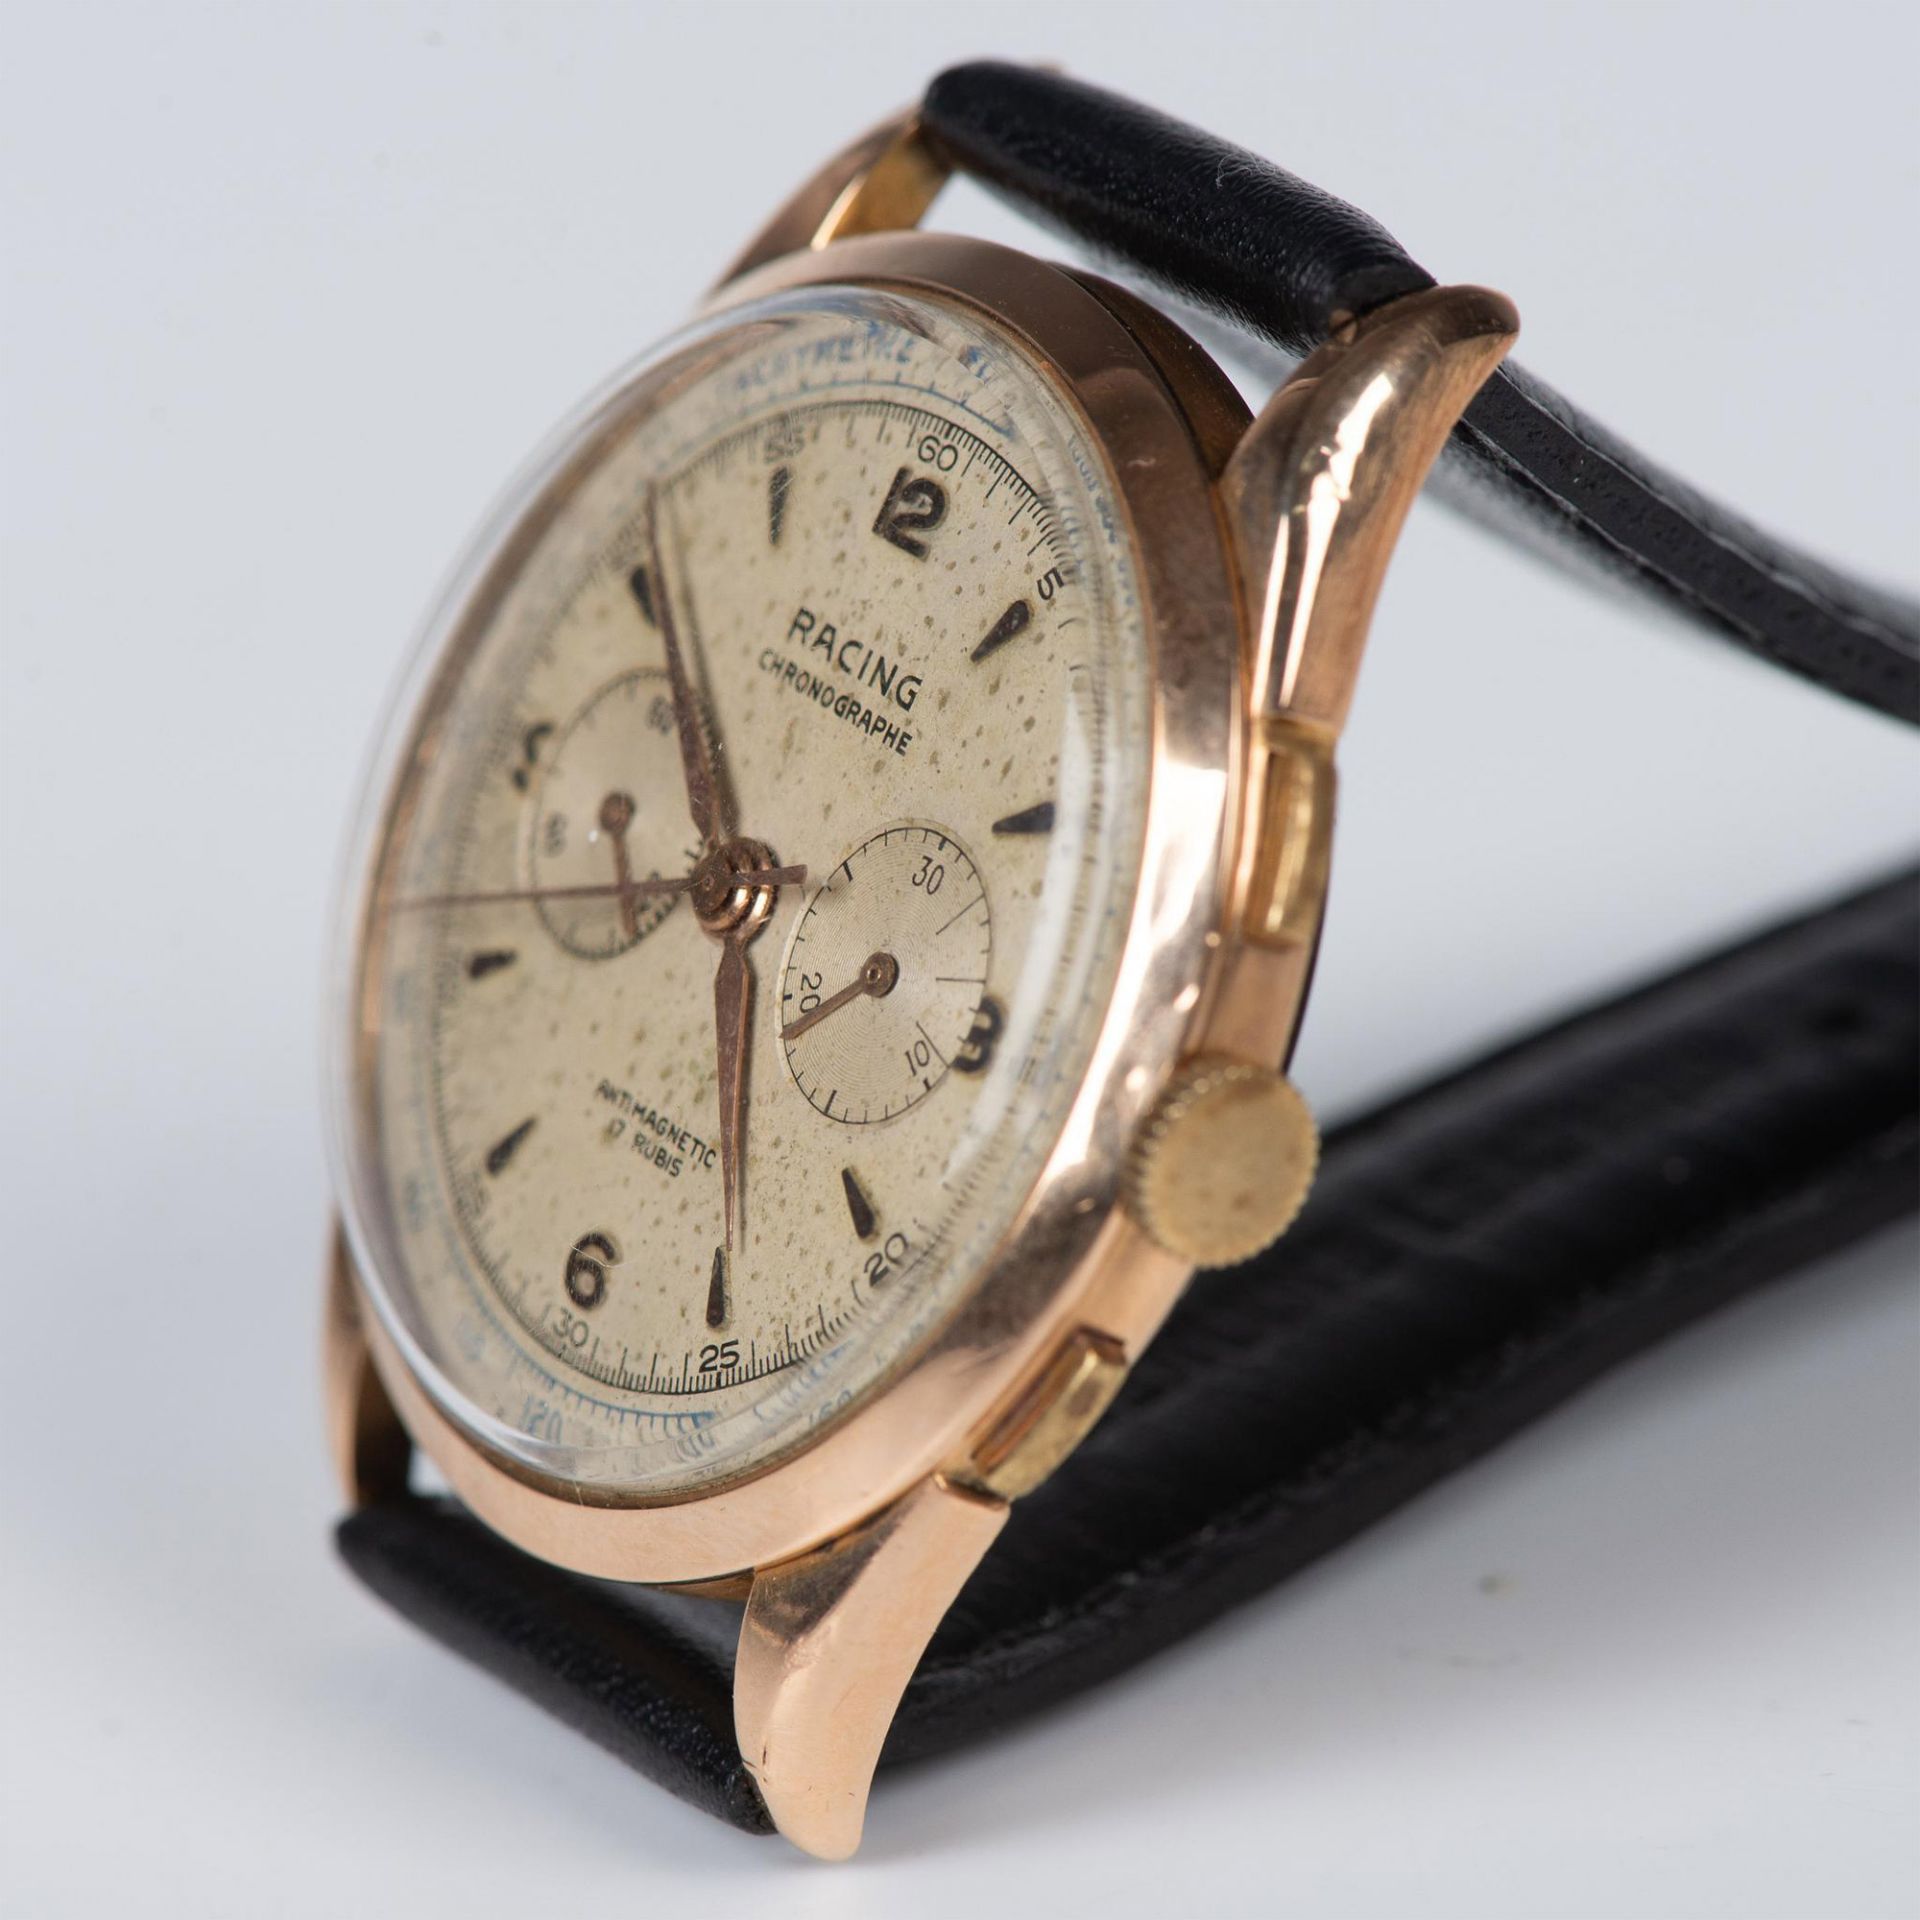 Racing Chronograph 18K Gold Men's Wrist Watch - Image 6 of 11